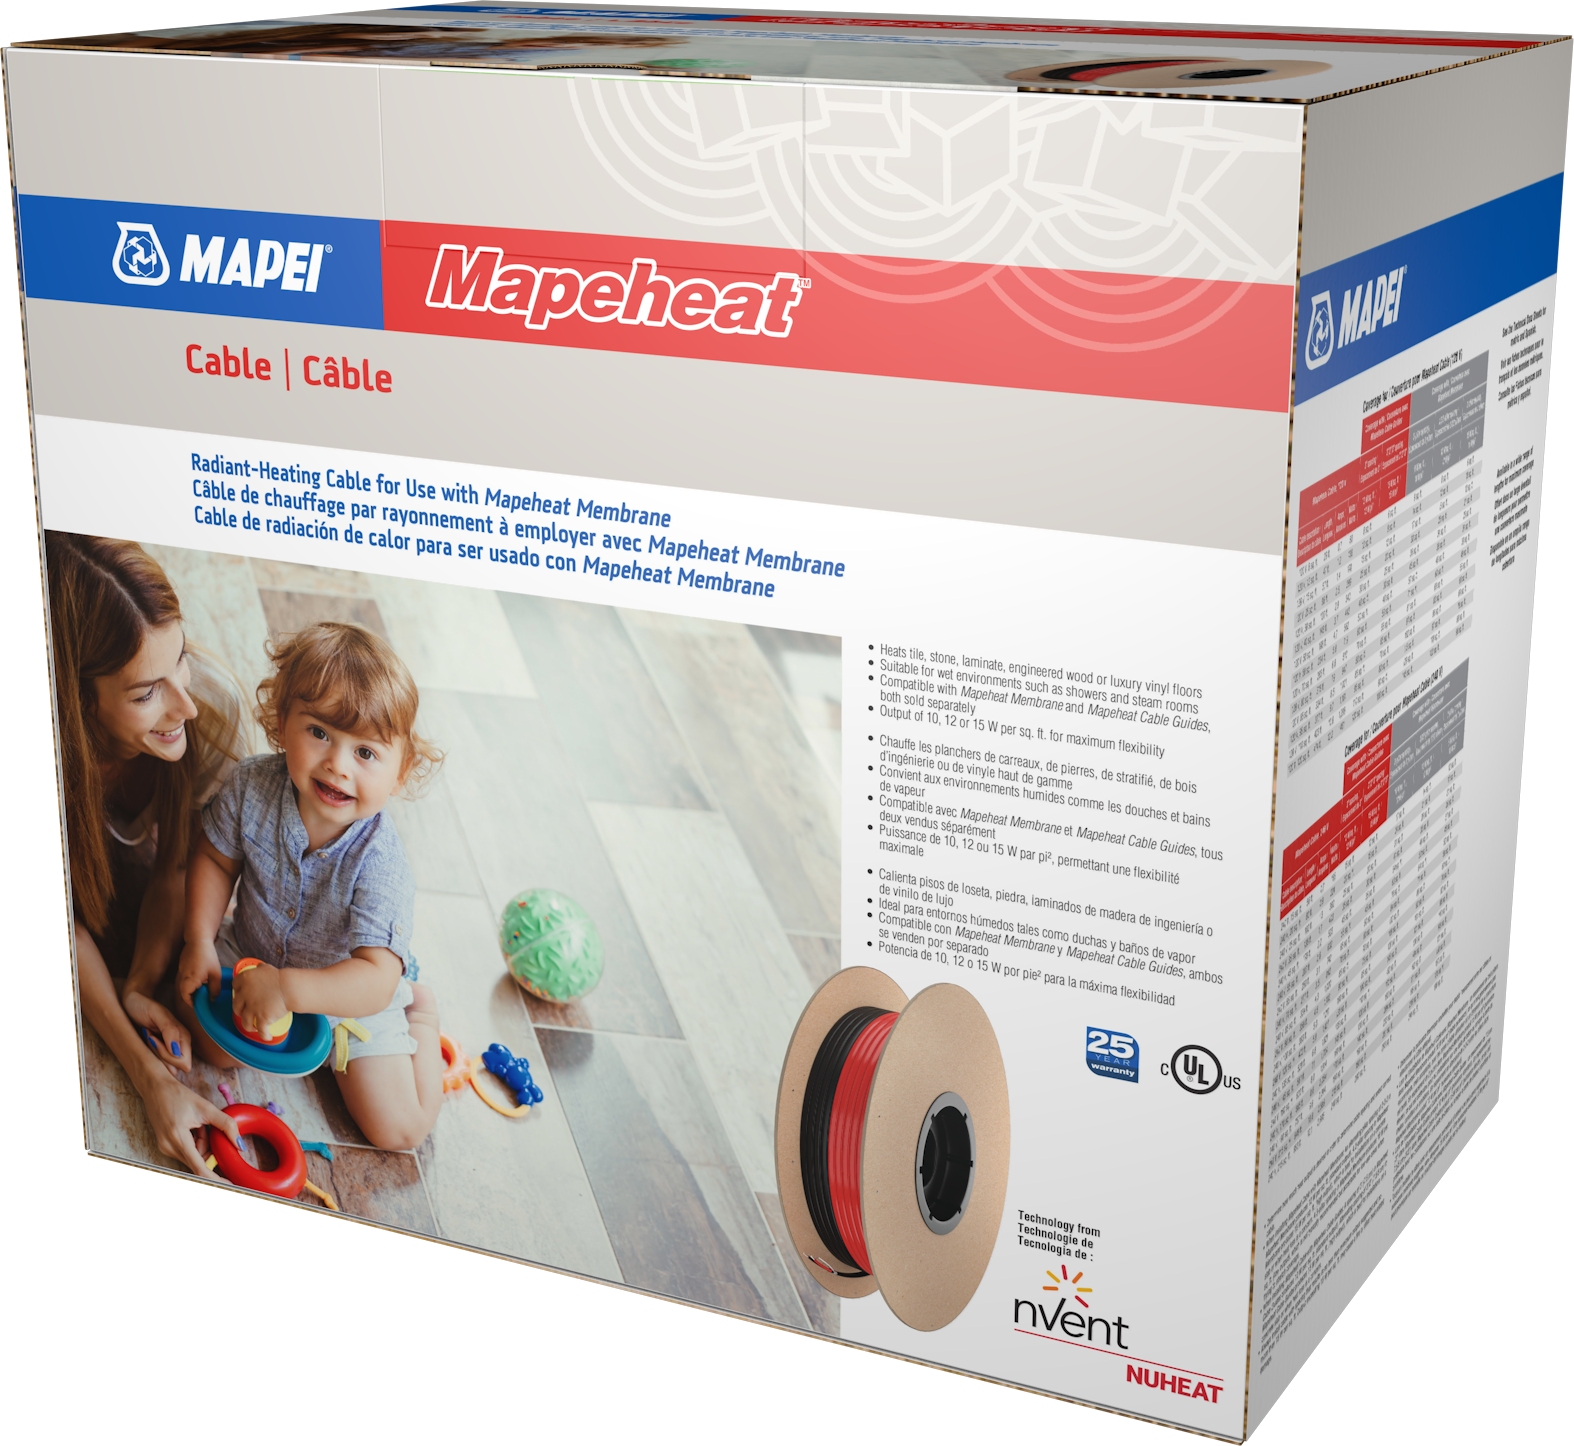 Mapei (2858901) product